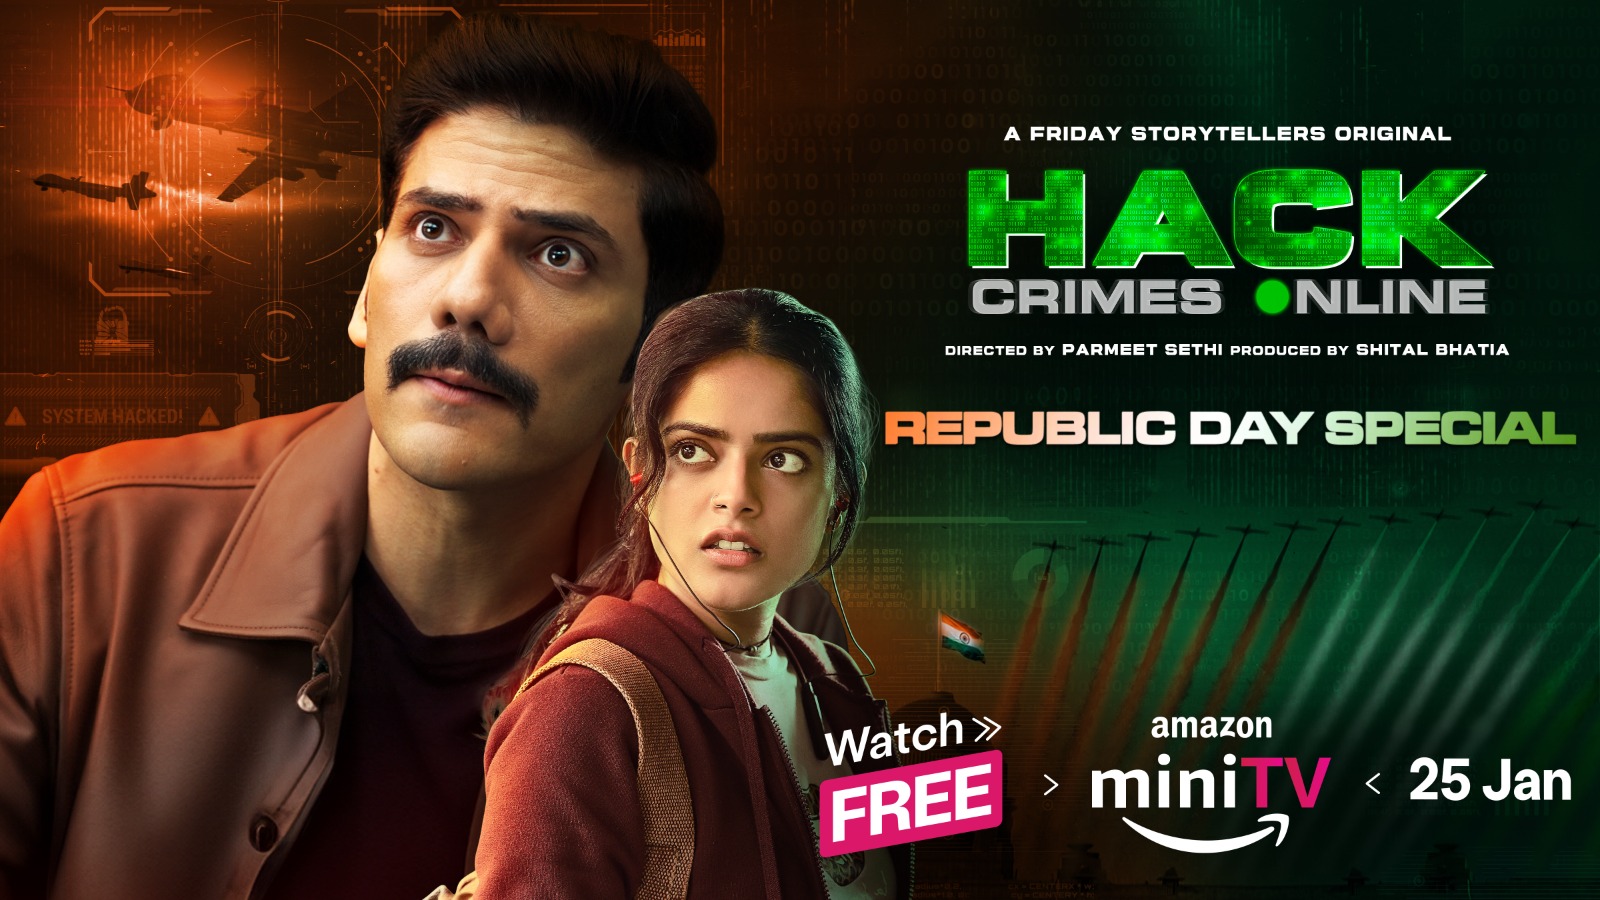 Enjoy Hack Crimes Online – Republic Day Special!